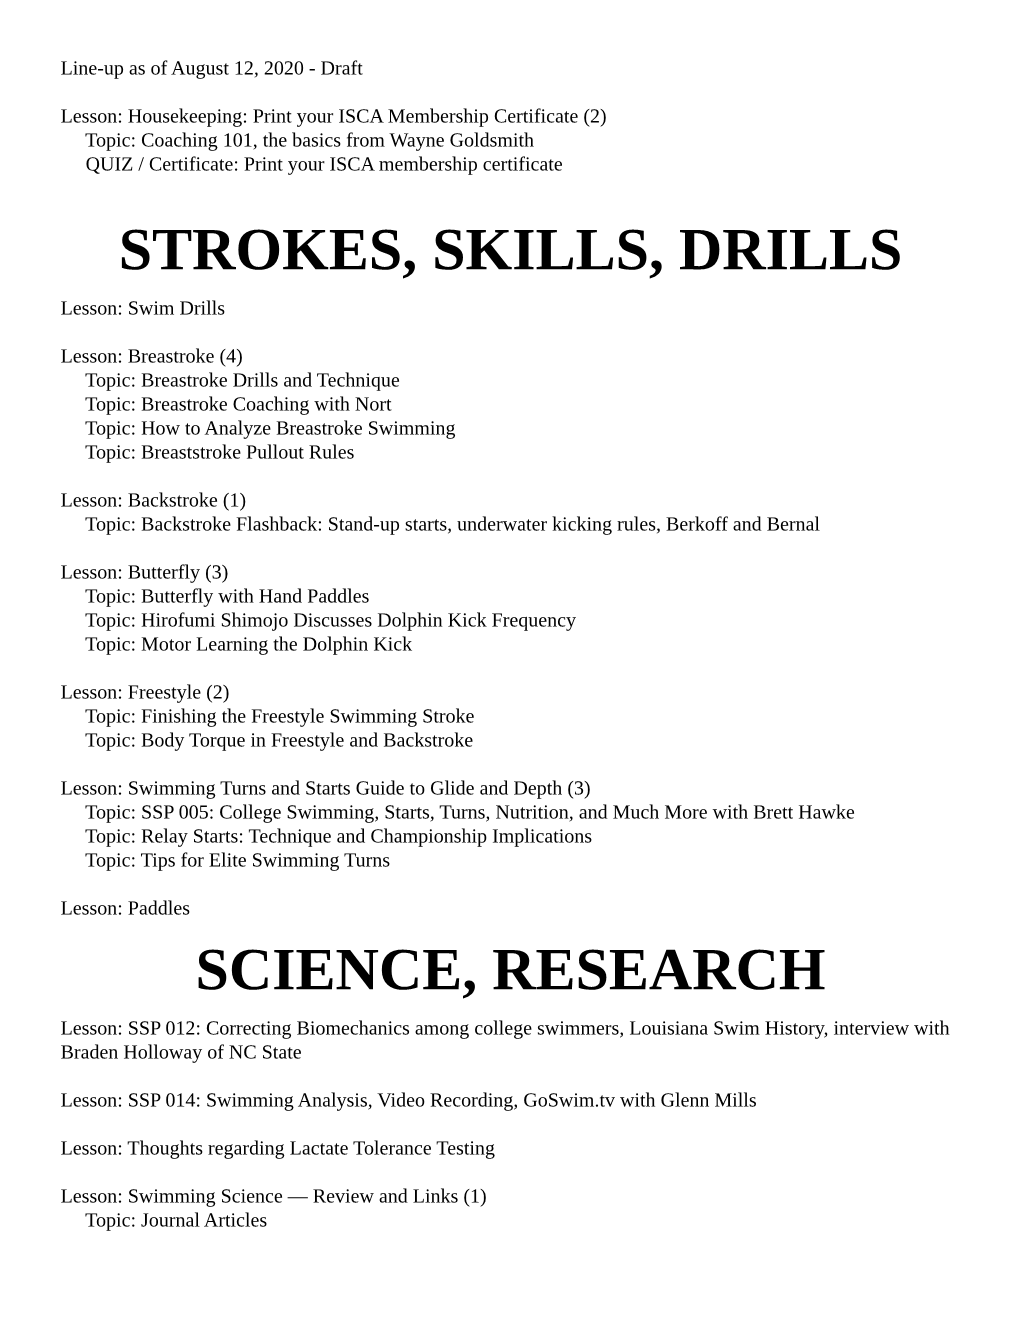 Strokes, Skills, Drills Science, Research